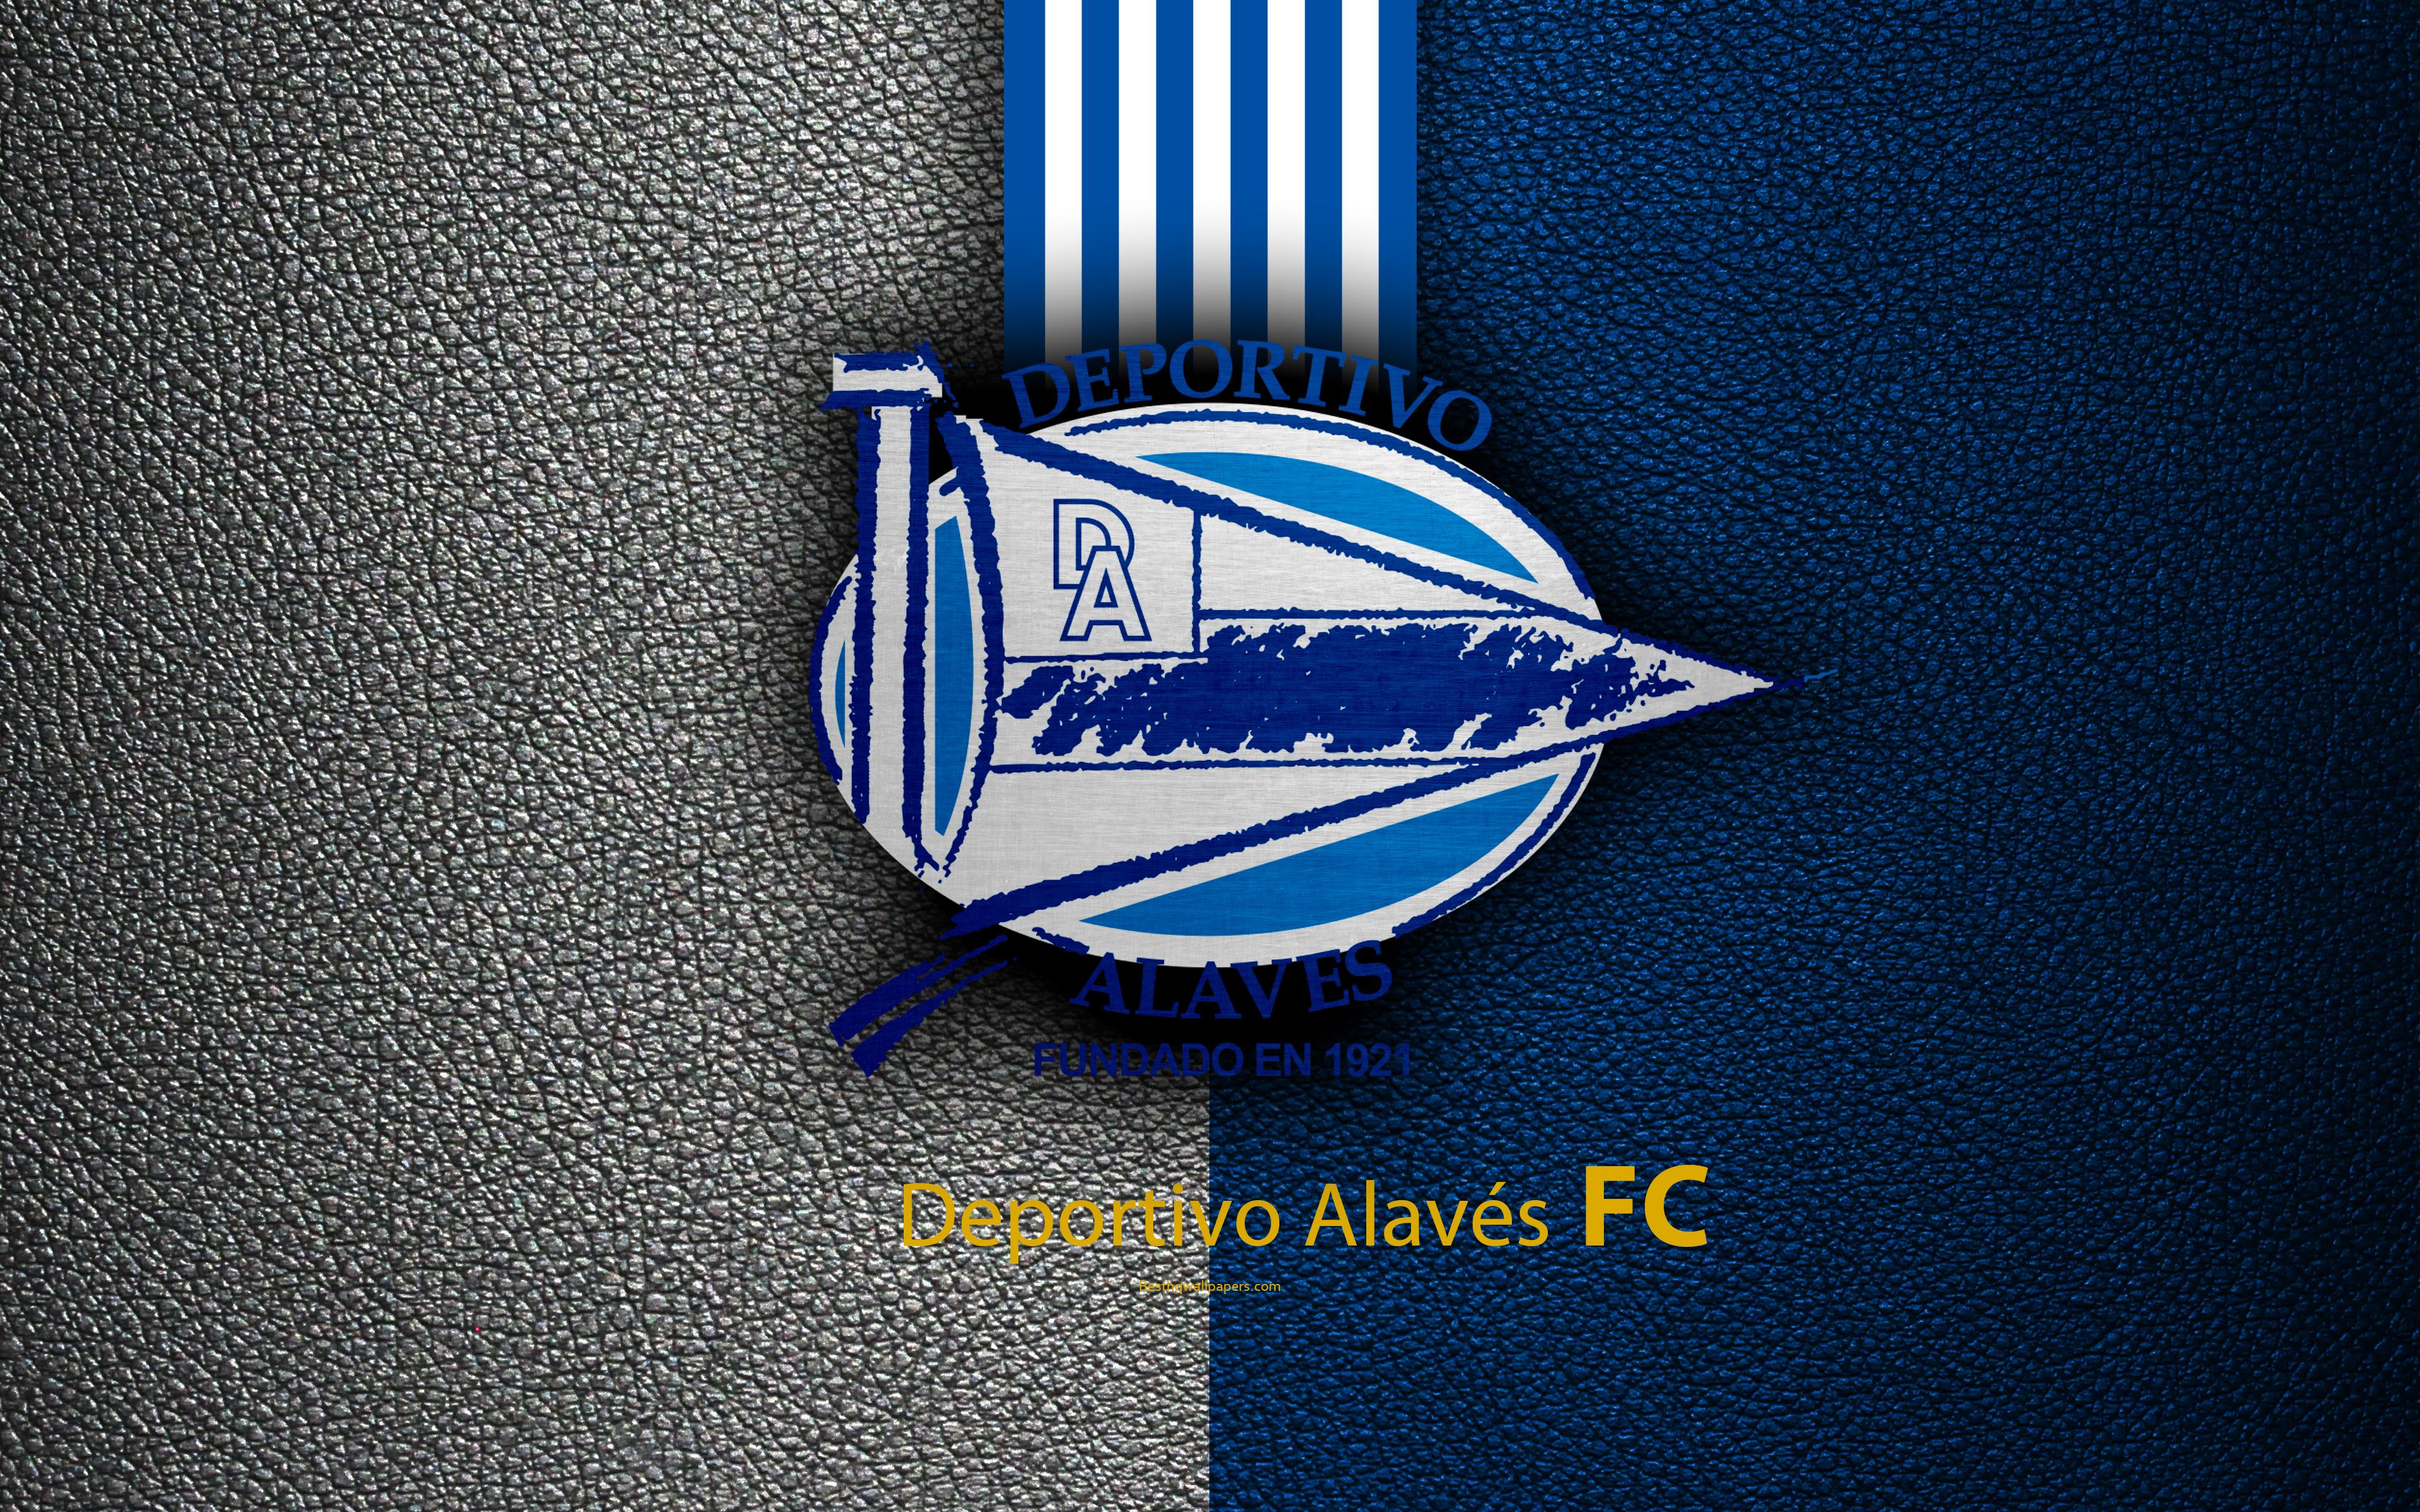 Download wallpaper Deportivo Alaves FC, 4K, Spanish football club